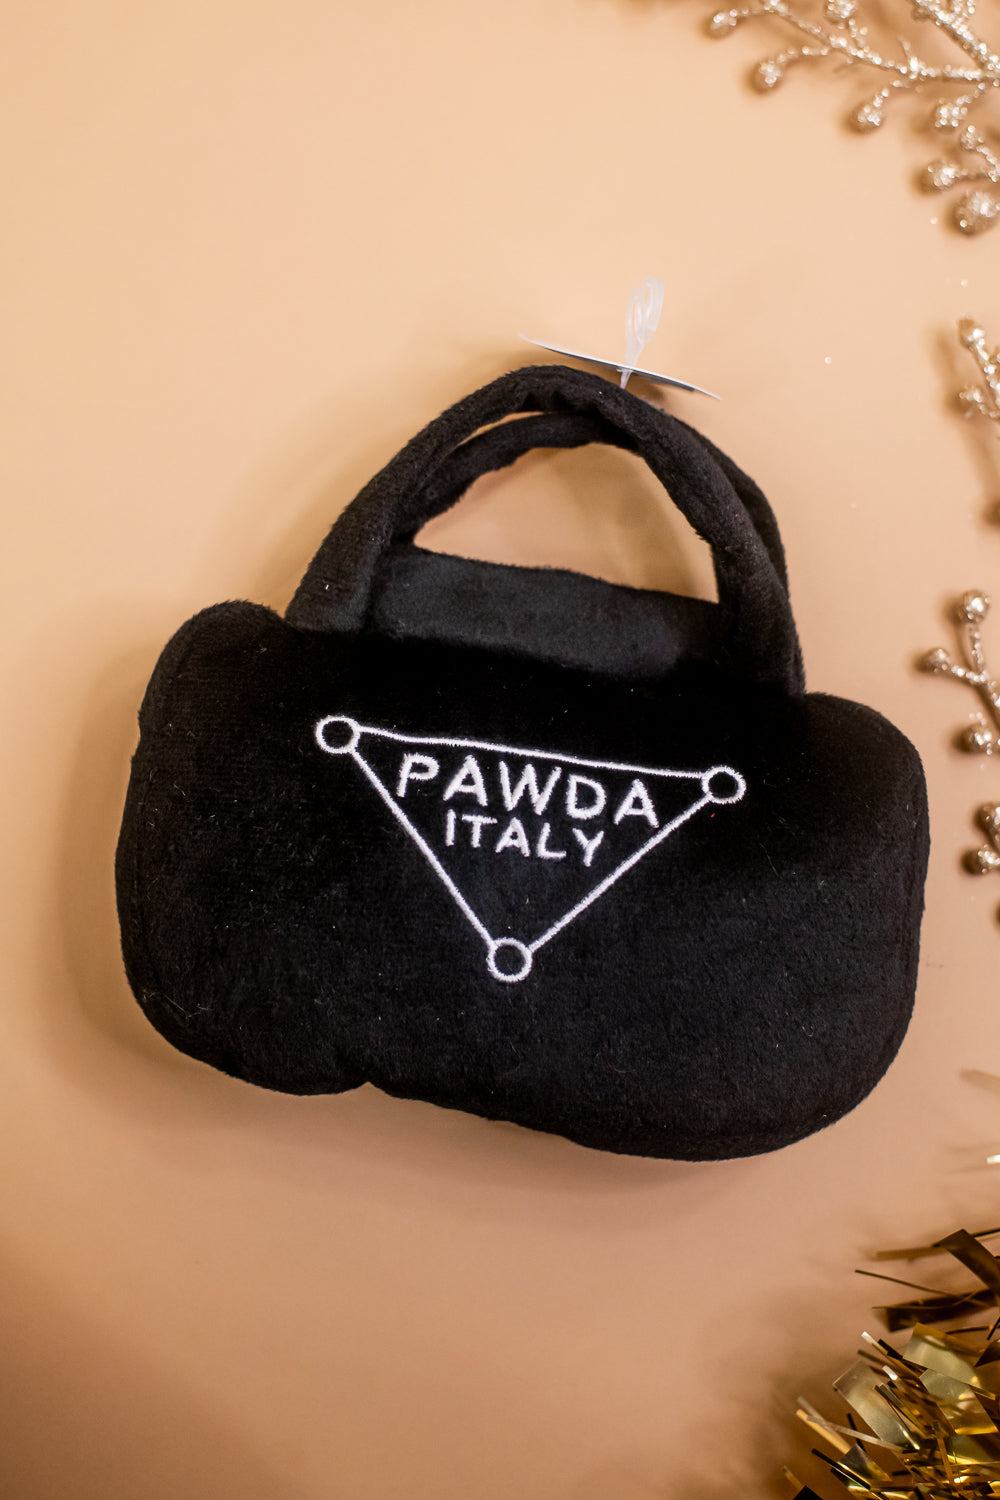 Dog Toy White Pawda Italy